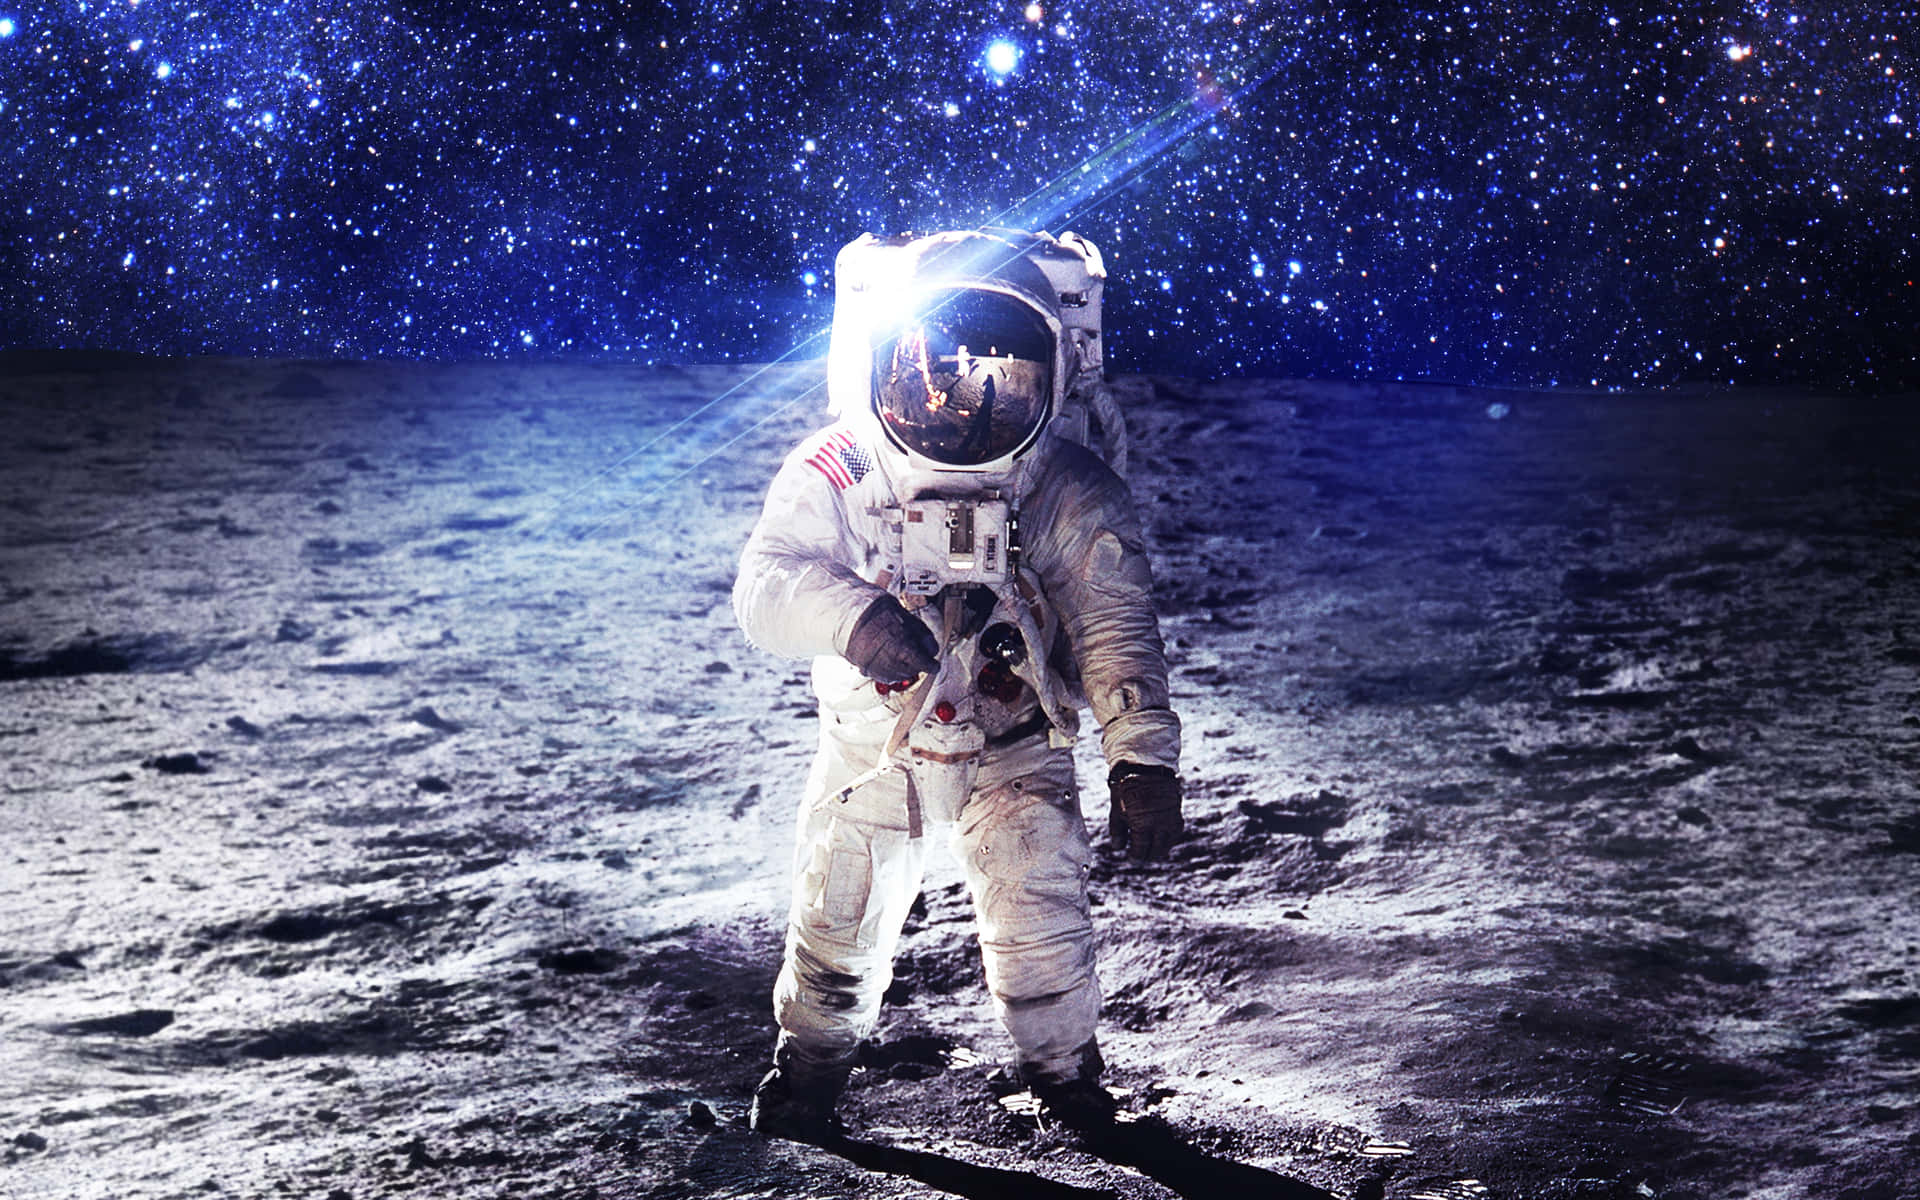 A Fearless Astronaut Exploring The Lunar Landscape. Wallpaper